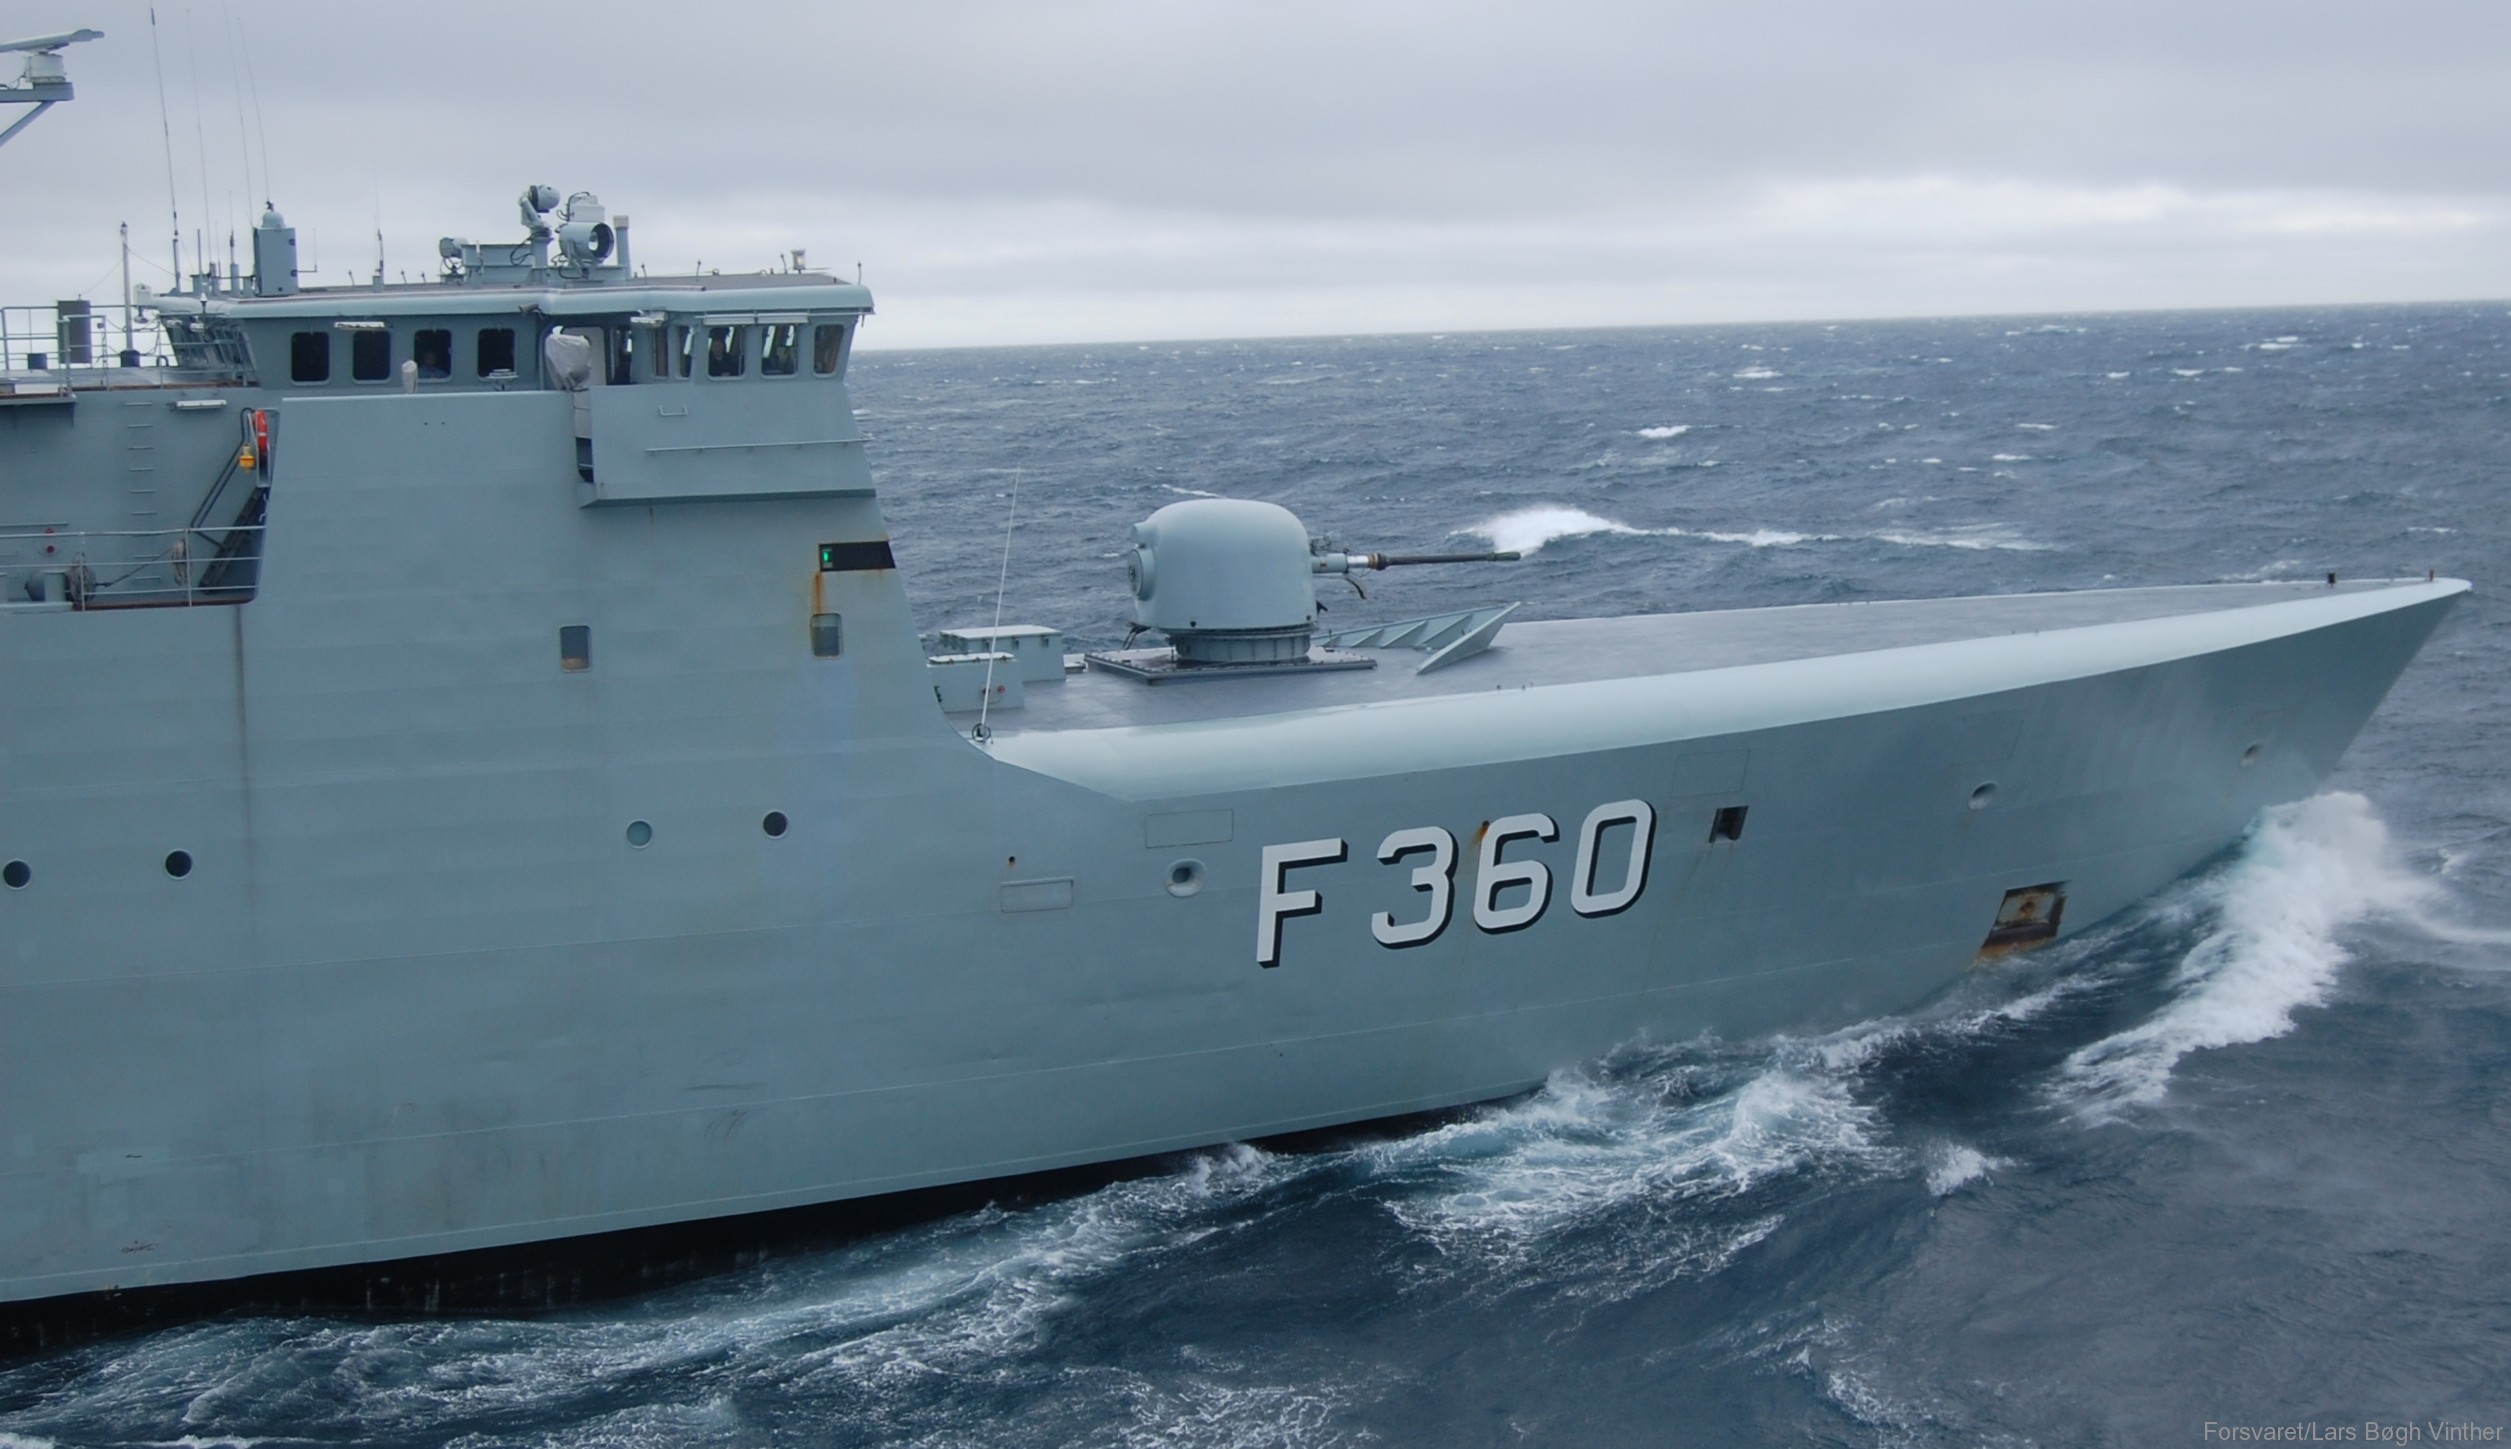 f-360 hdms hvidbjornen thetis class ocean patrol frigate royal danish navy kongelige danske marine kdm inspektionsskibet 29 oto melara 76/62 gun